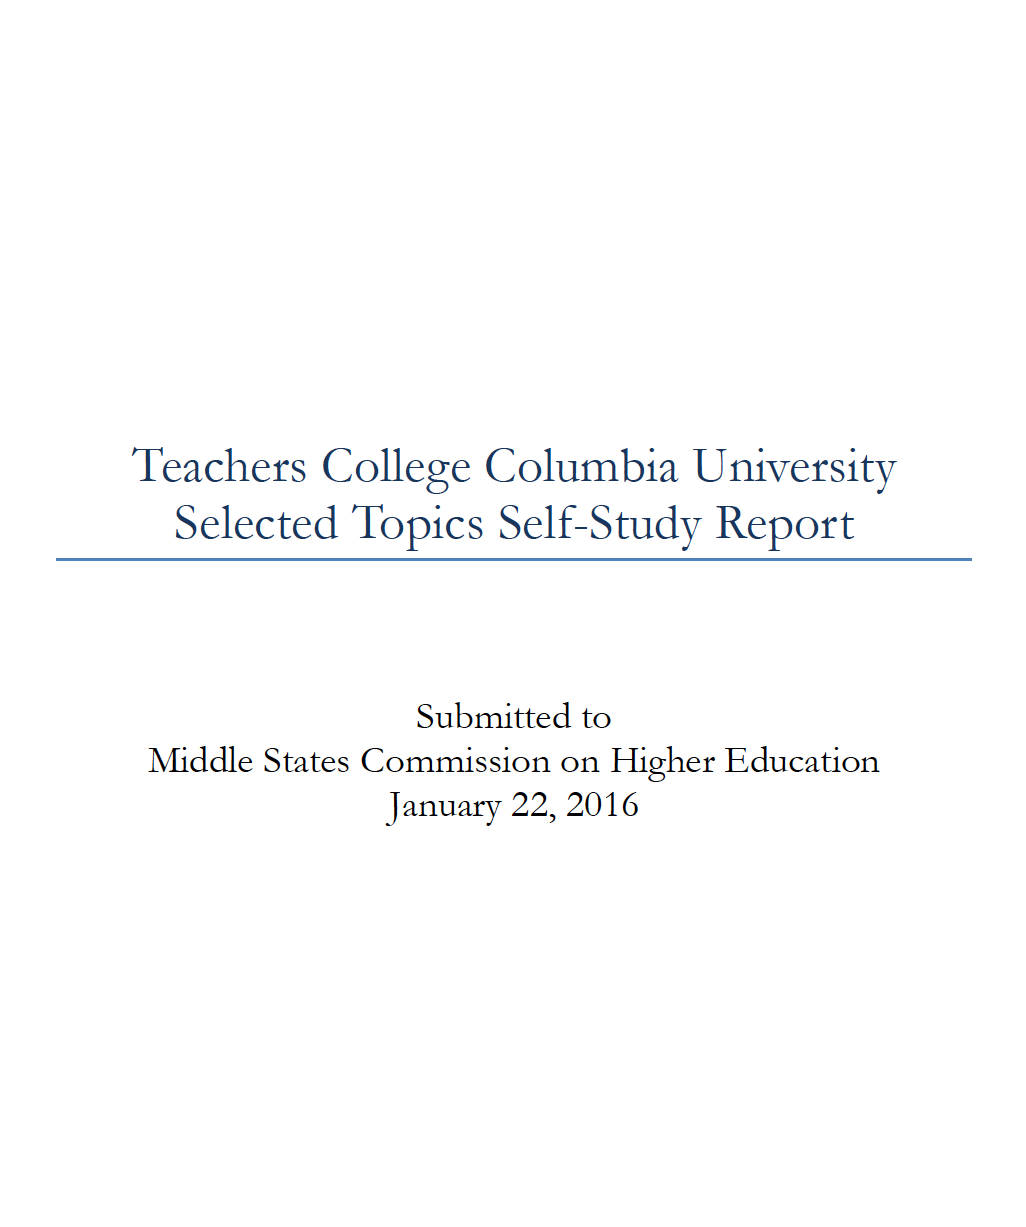 2016 Teachers College Columbia University Selected Topics Self-Study Report